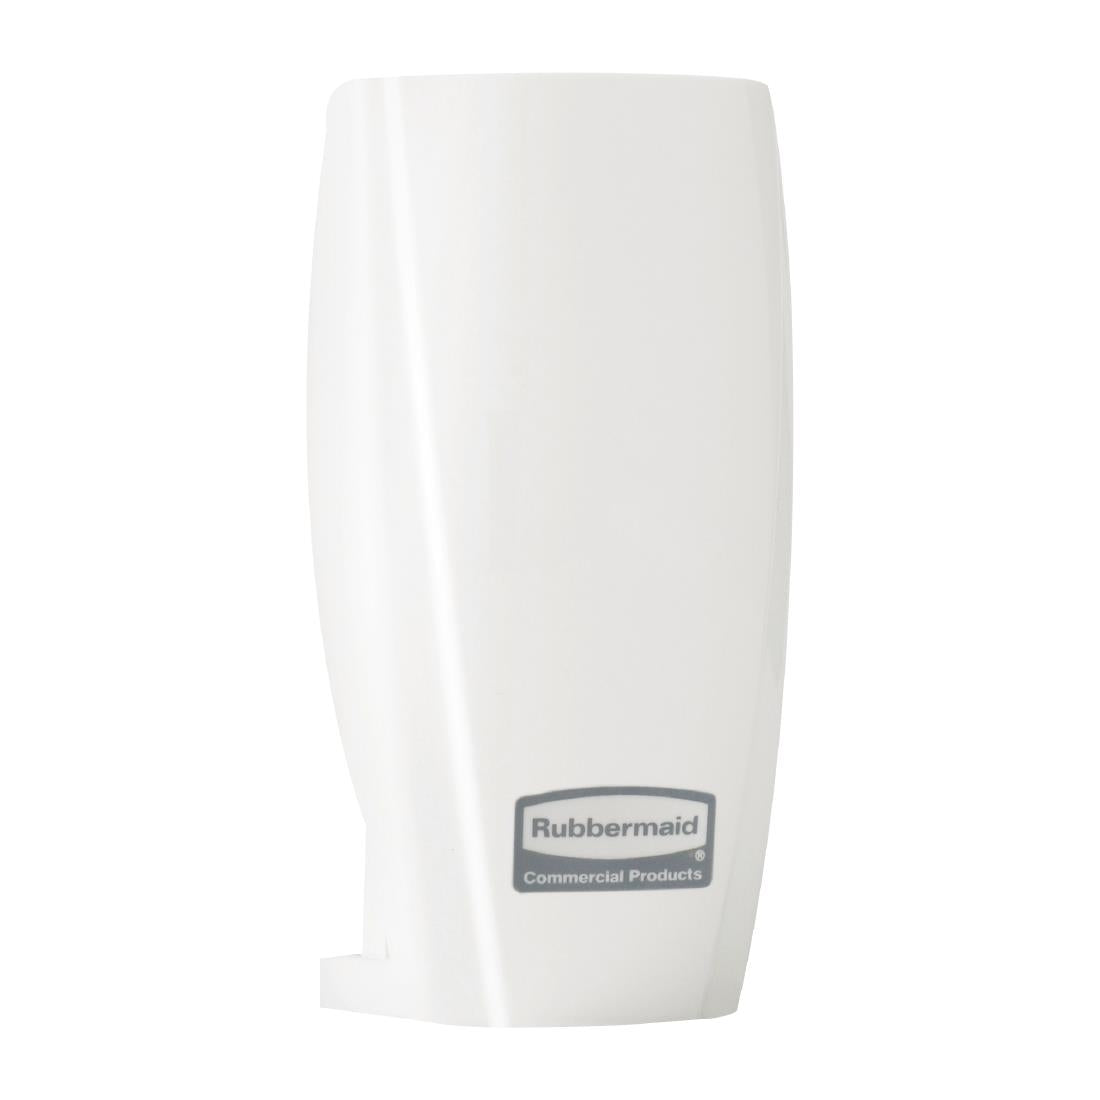 FT576 Rubbermaid TCell 1.0 Air Freshener Dispenser White JD Catering Equipment Solutions Ltd